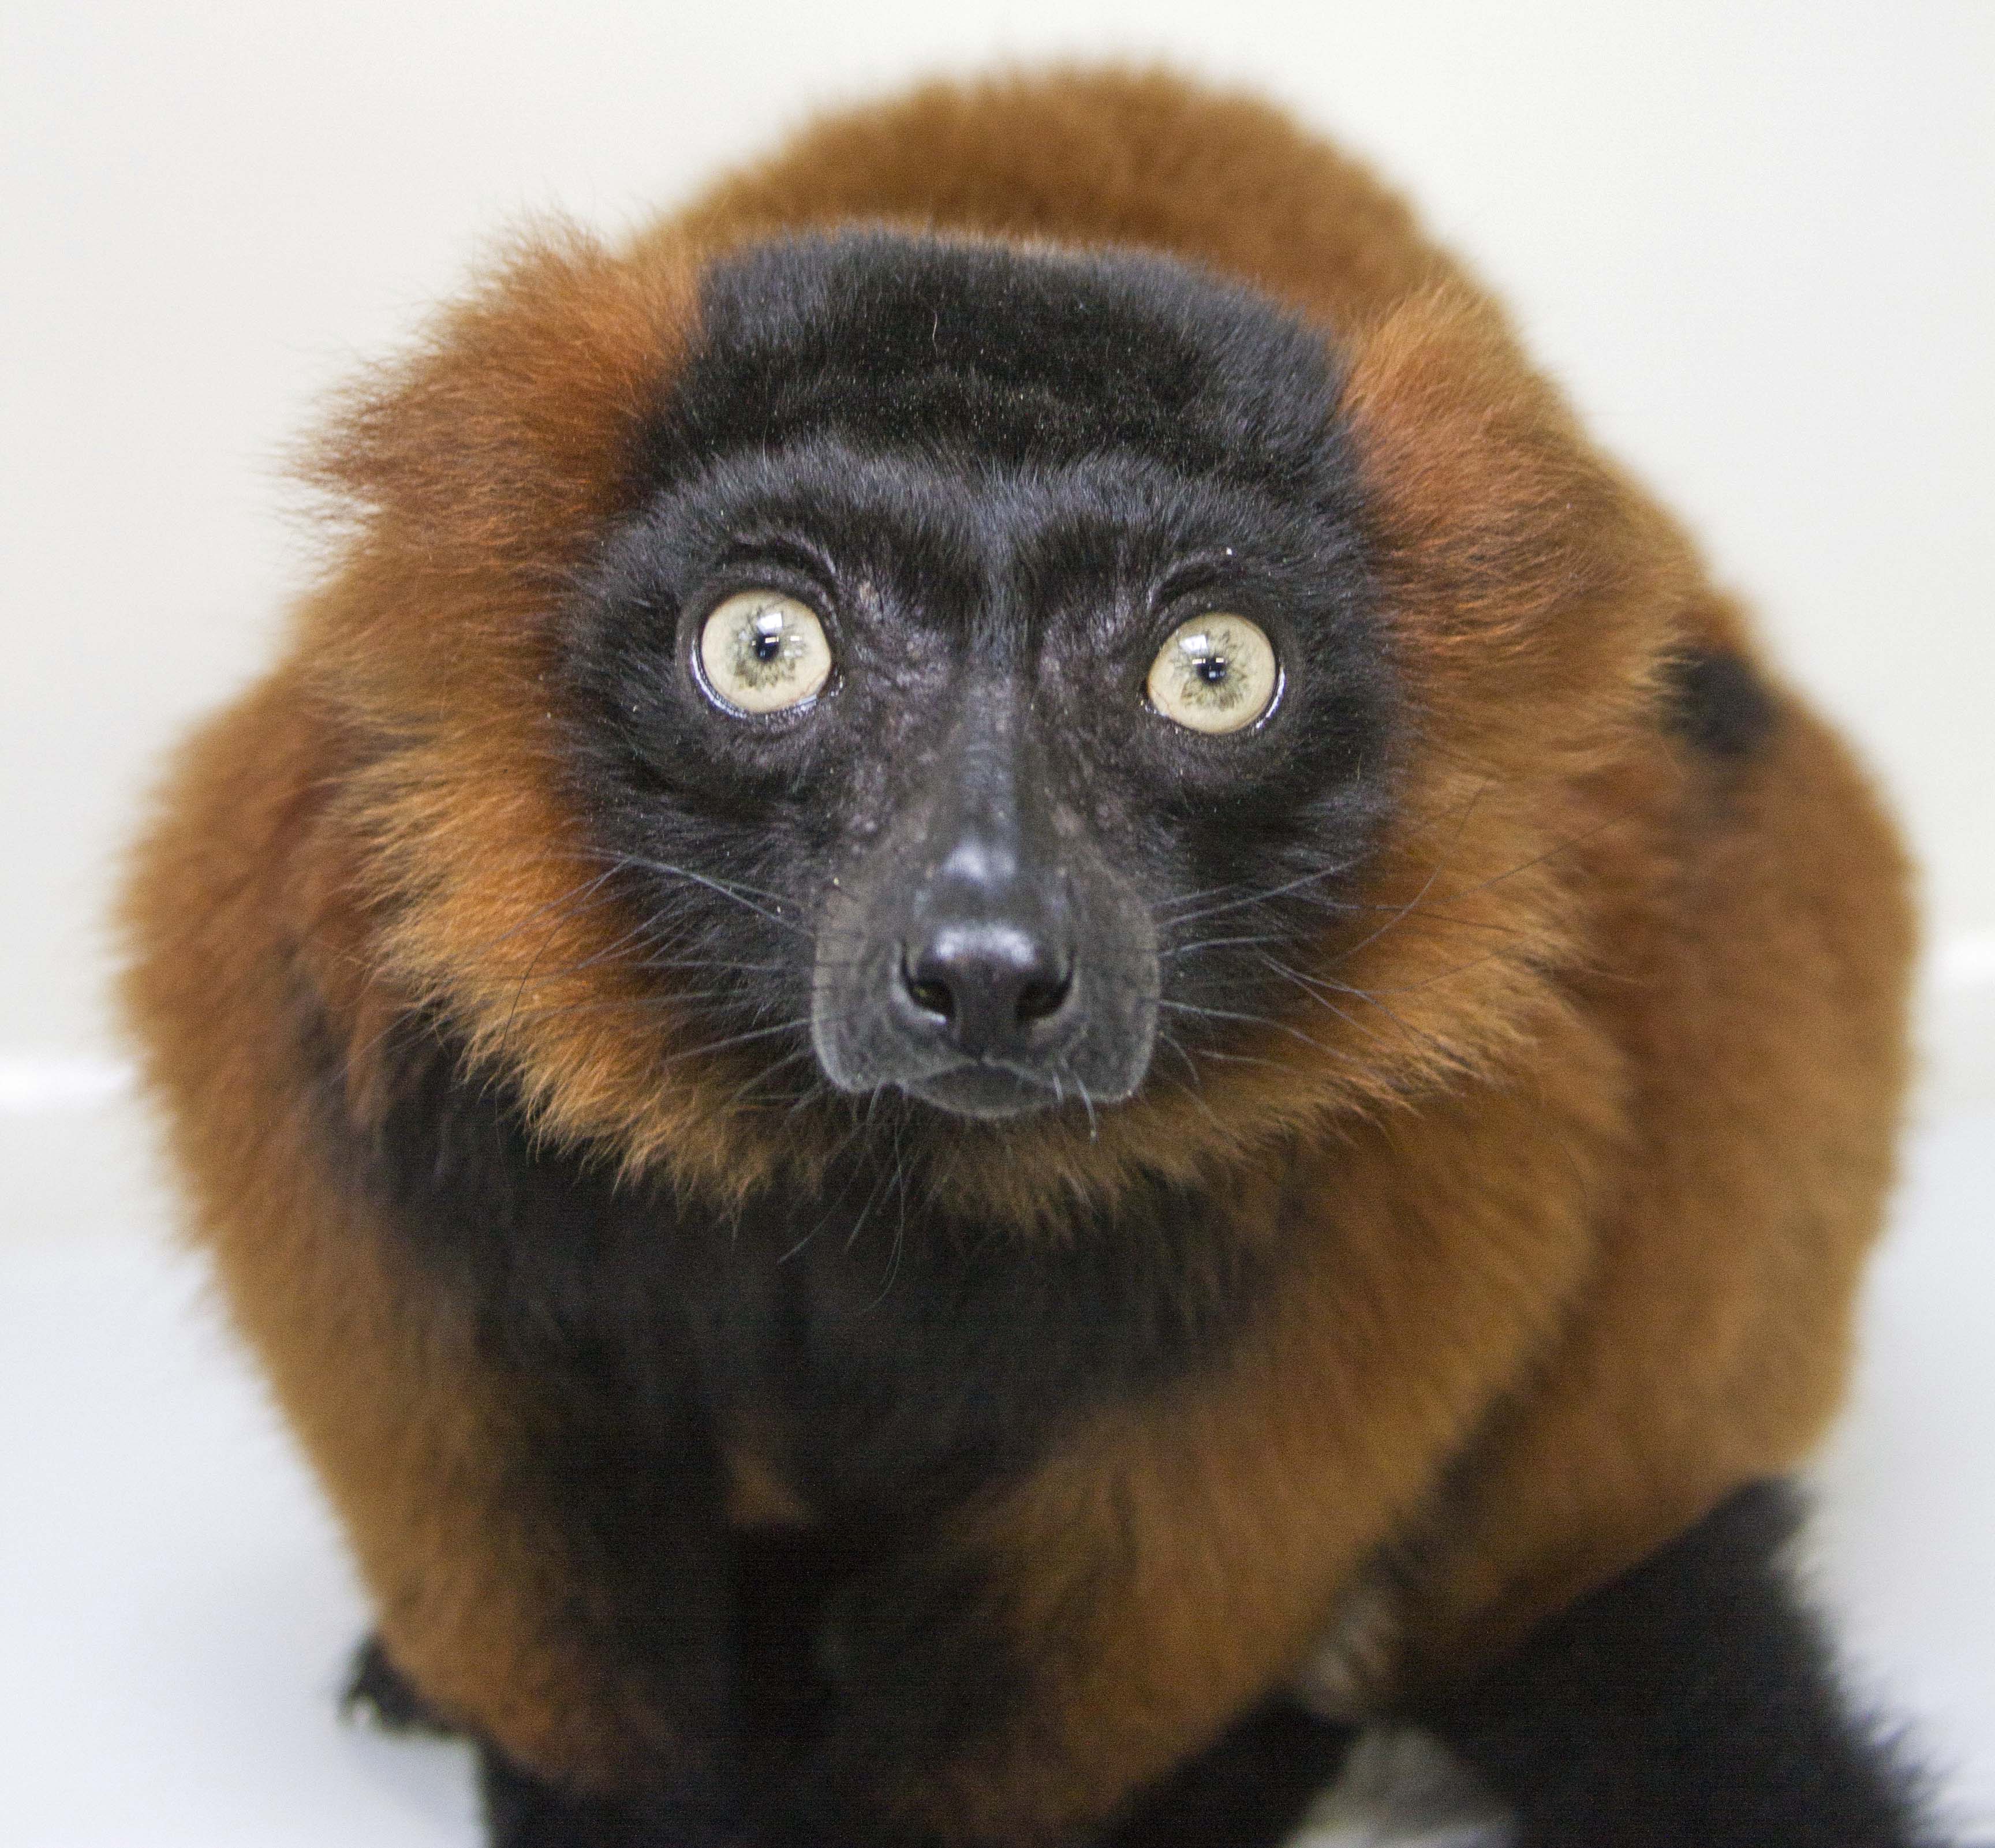 Red-ruffed lemur at the Tennessee Aquarium